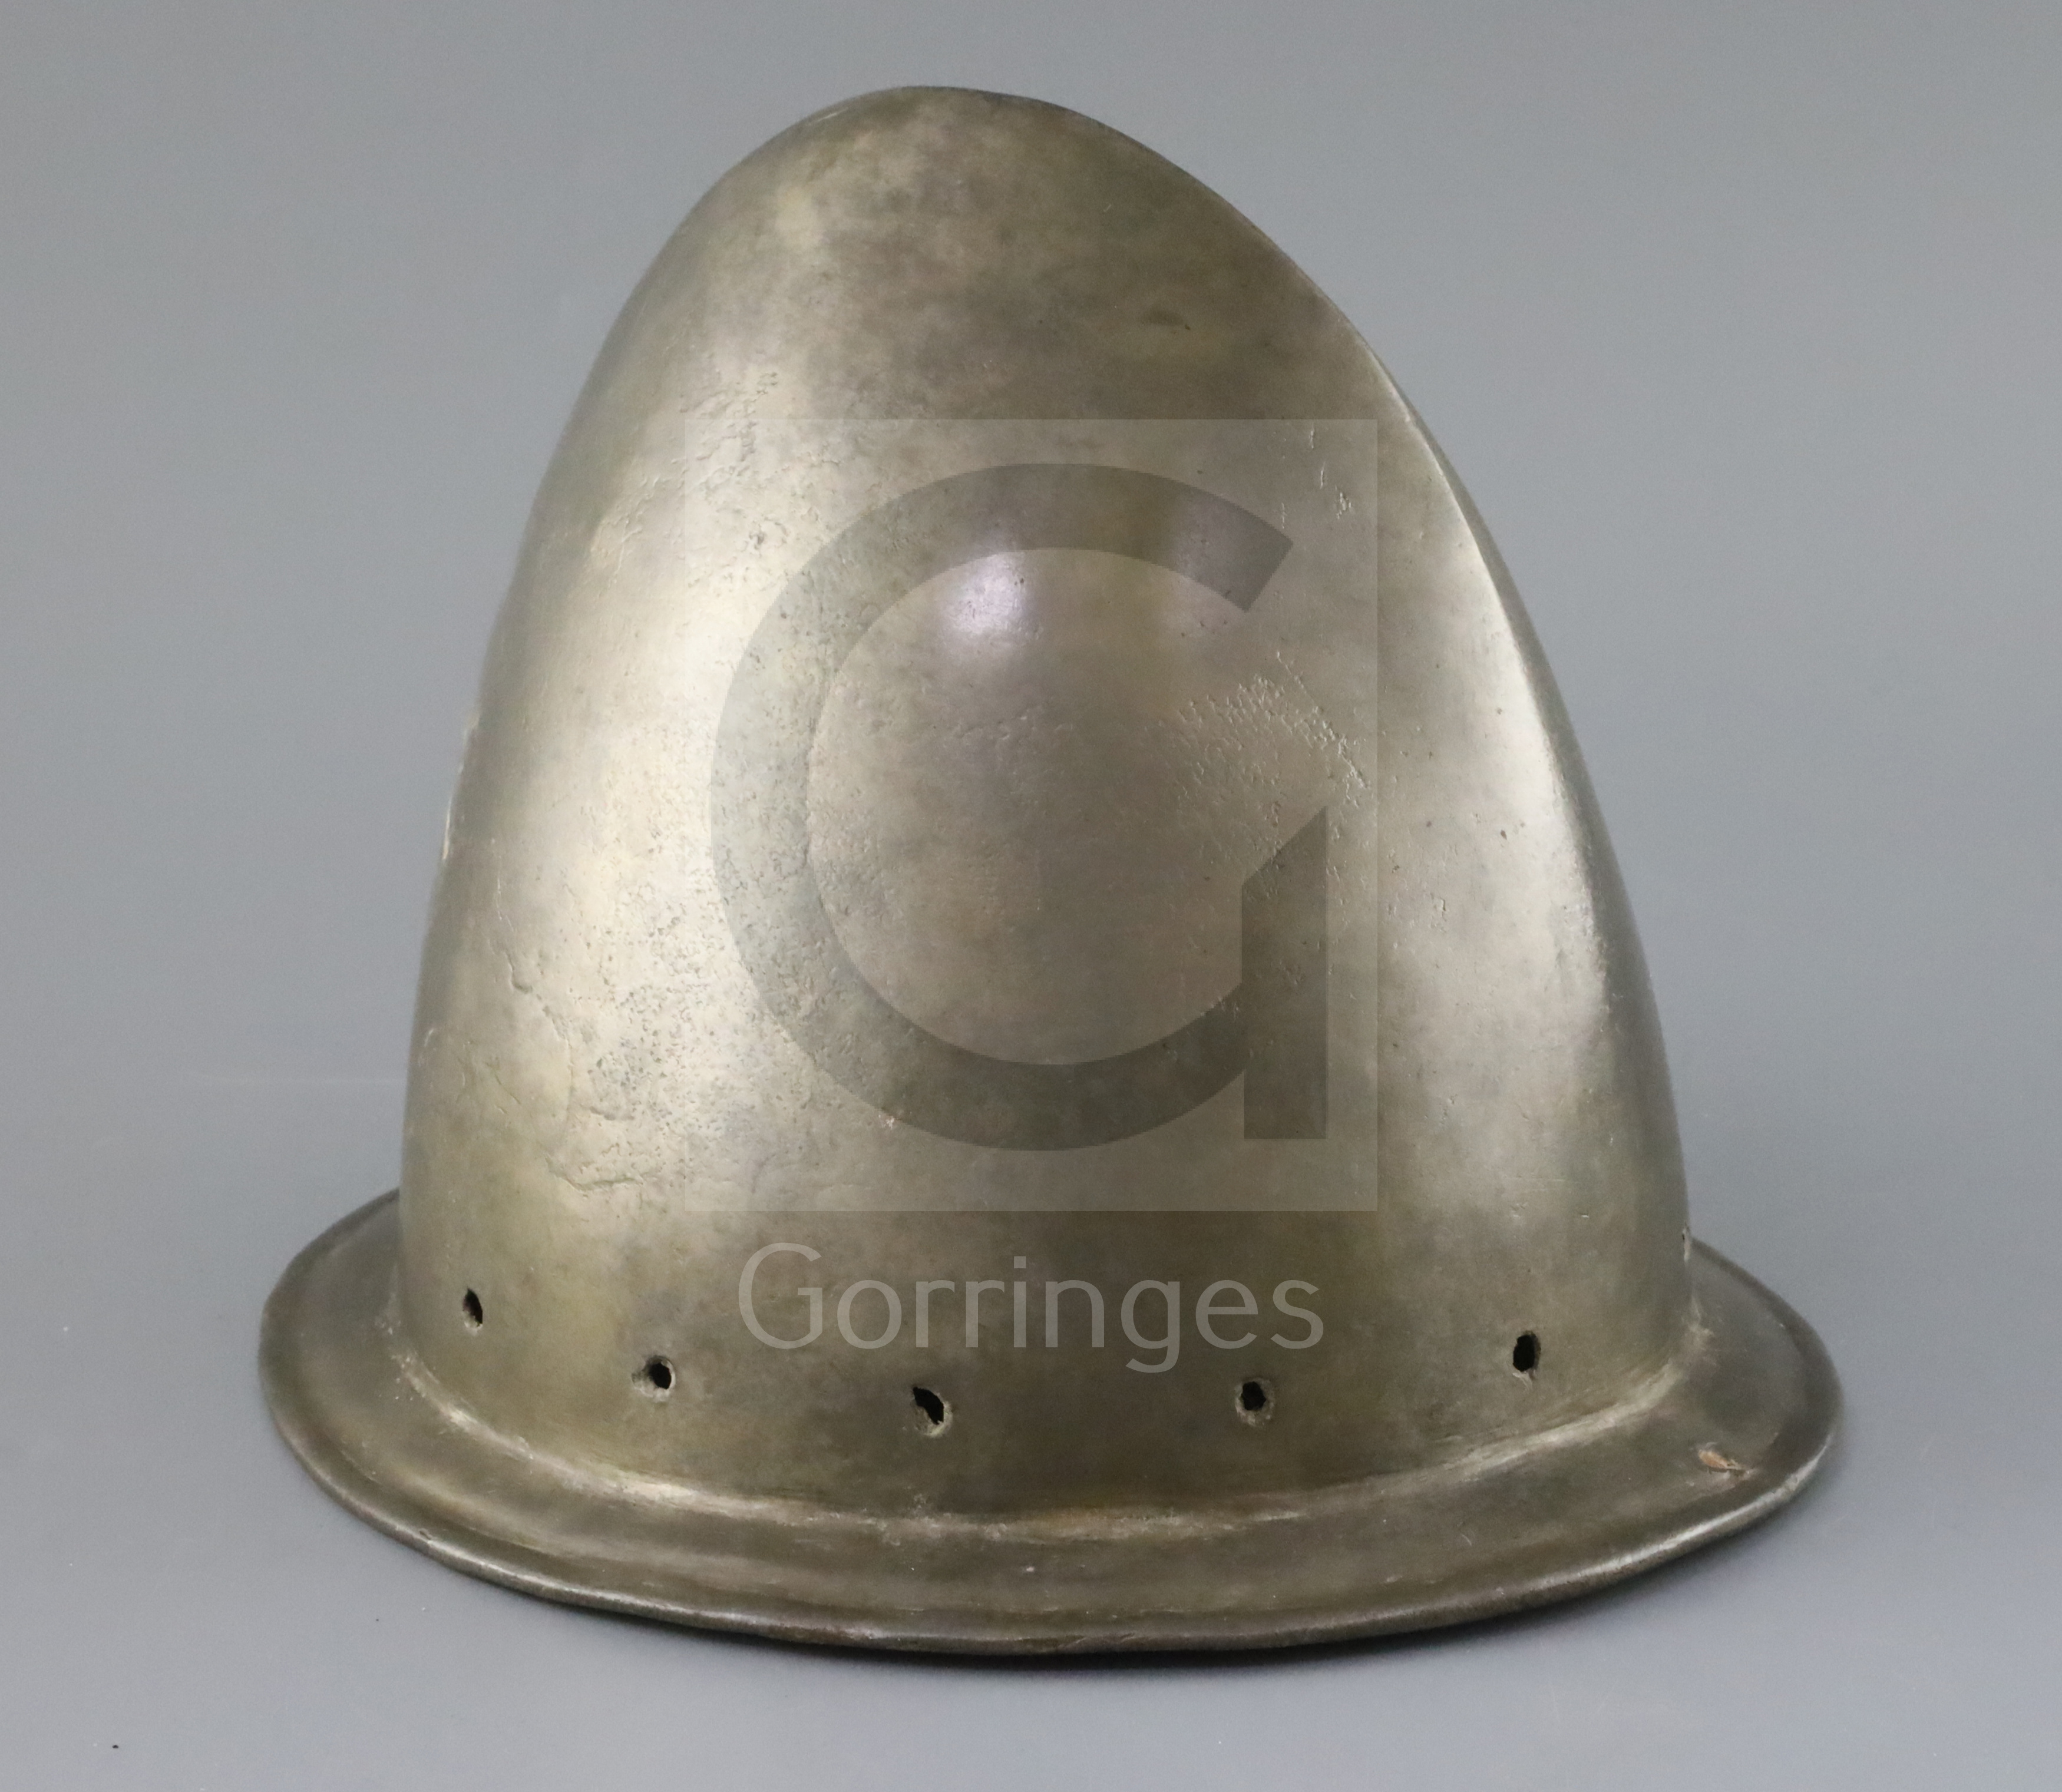 An Italian infantry helmet cabaset c.1580, polished steel raised from a single plate, medial ridge